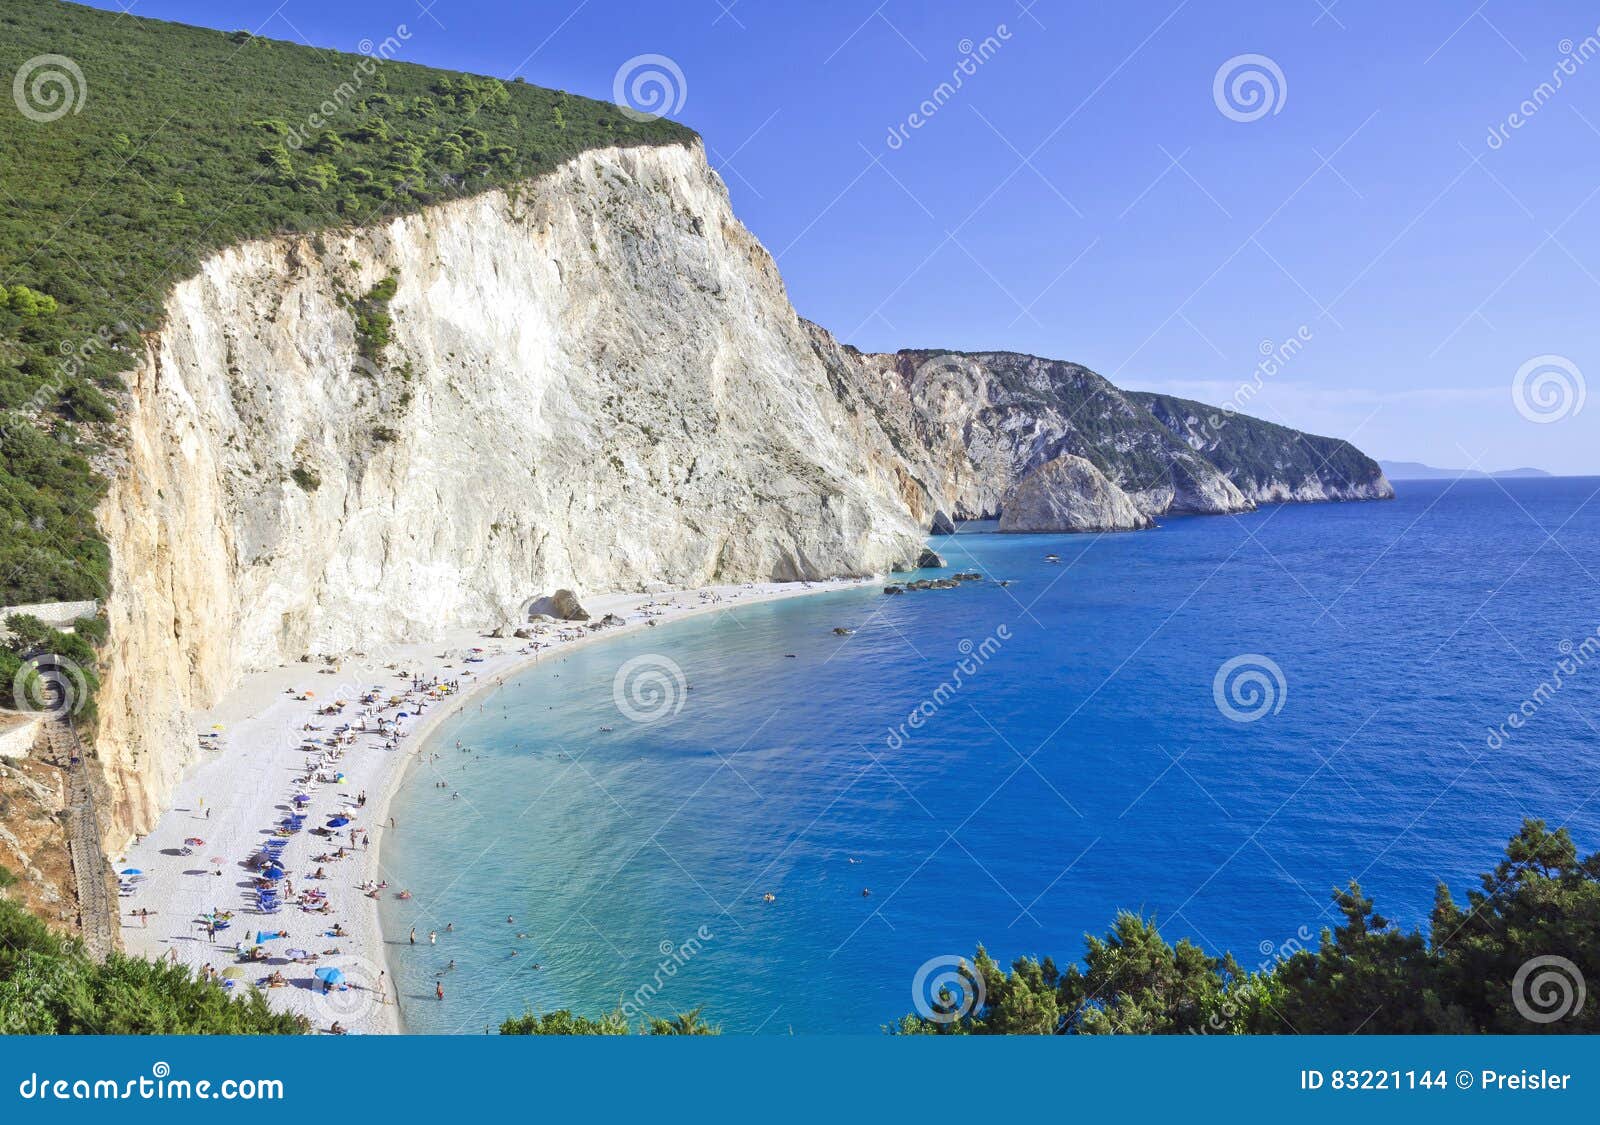 porto katsiki beach, greece